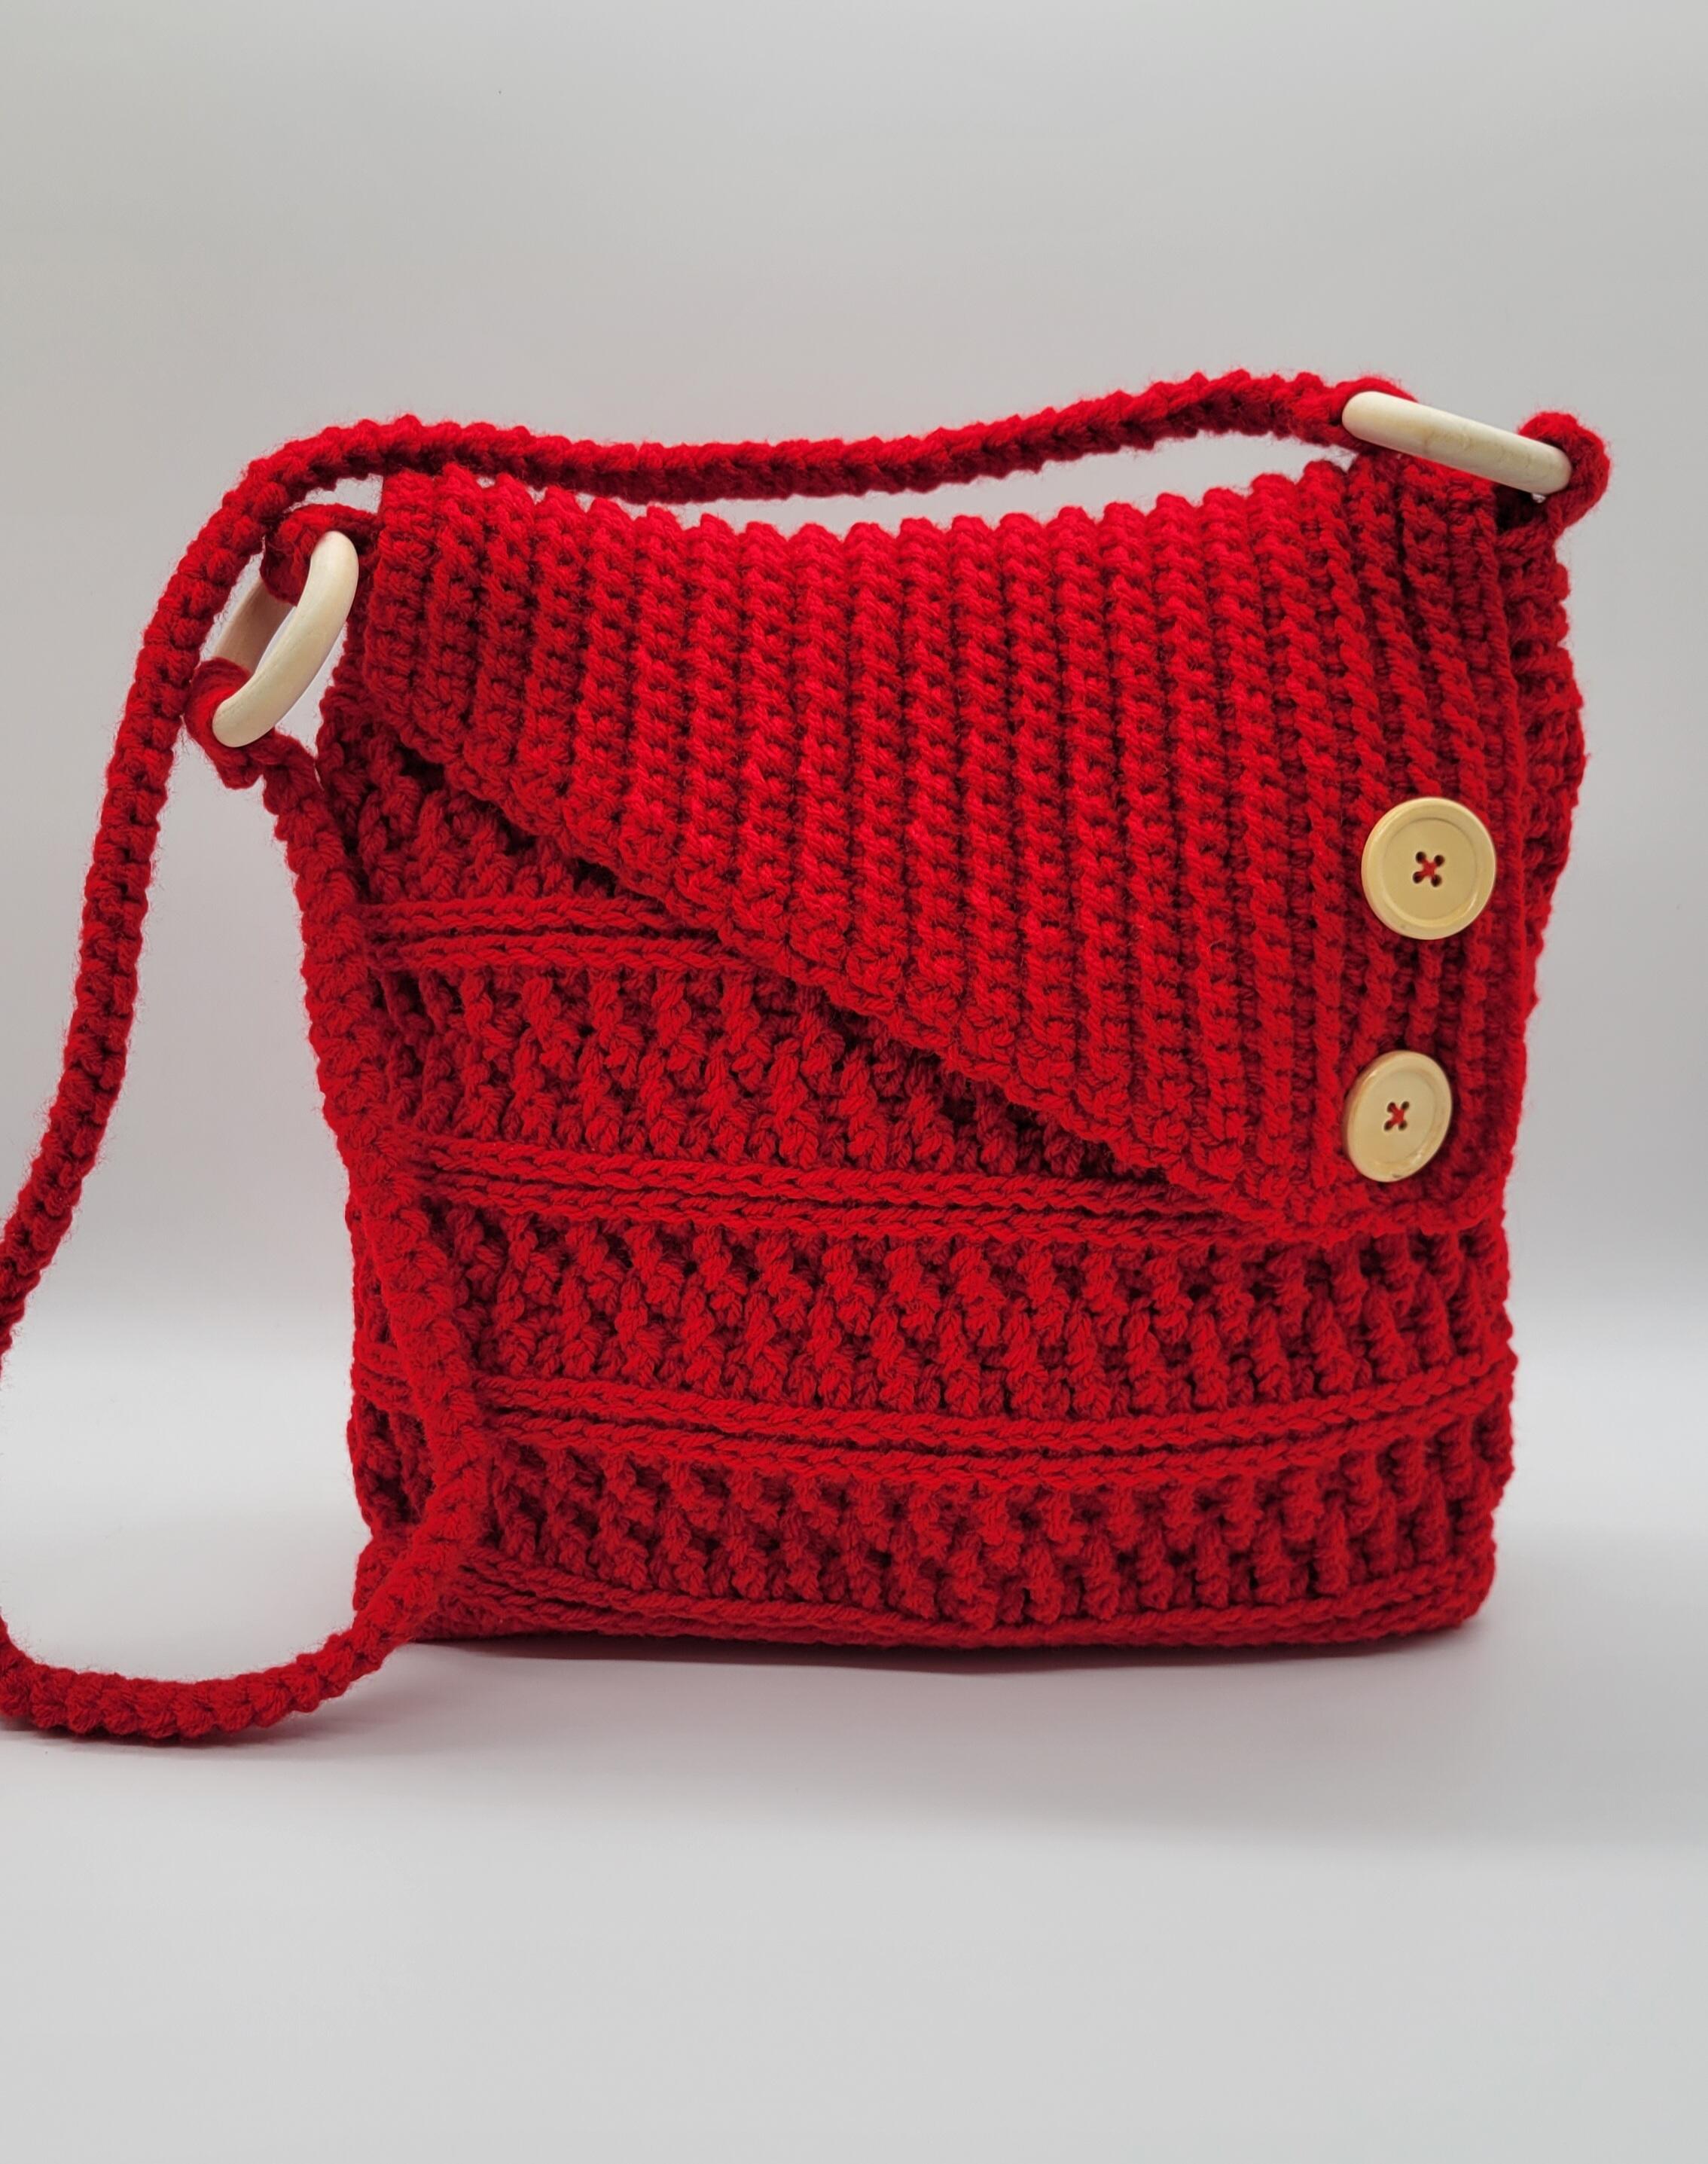 Buy Handknitted Crochet Bag, Crochet Purse Gifts for Her, Handmade Crochet  Bag, Crossbody Crochet Bag Multicolor Pattern24 at Amazon.in